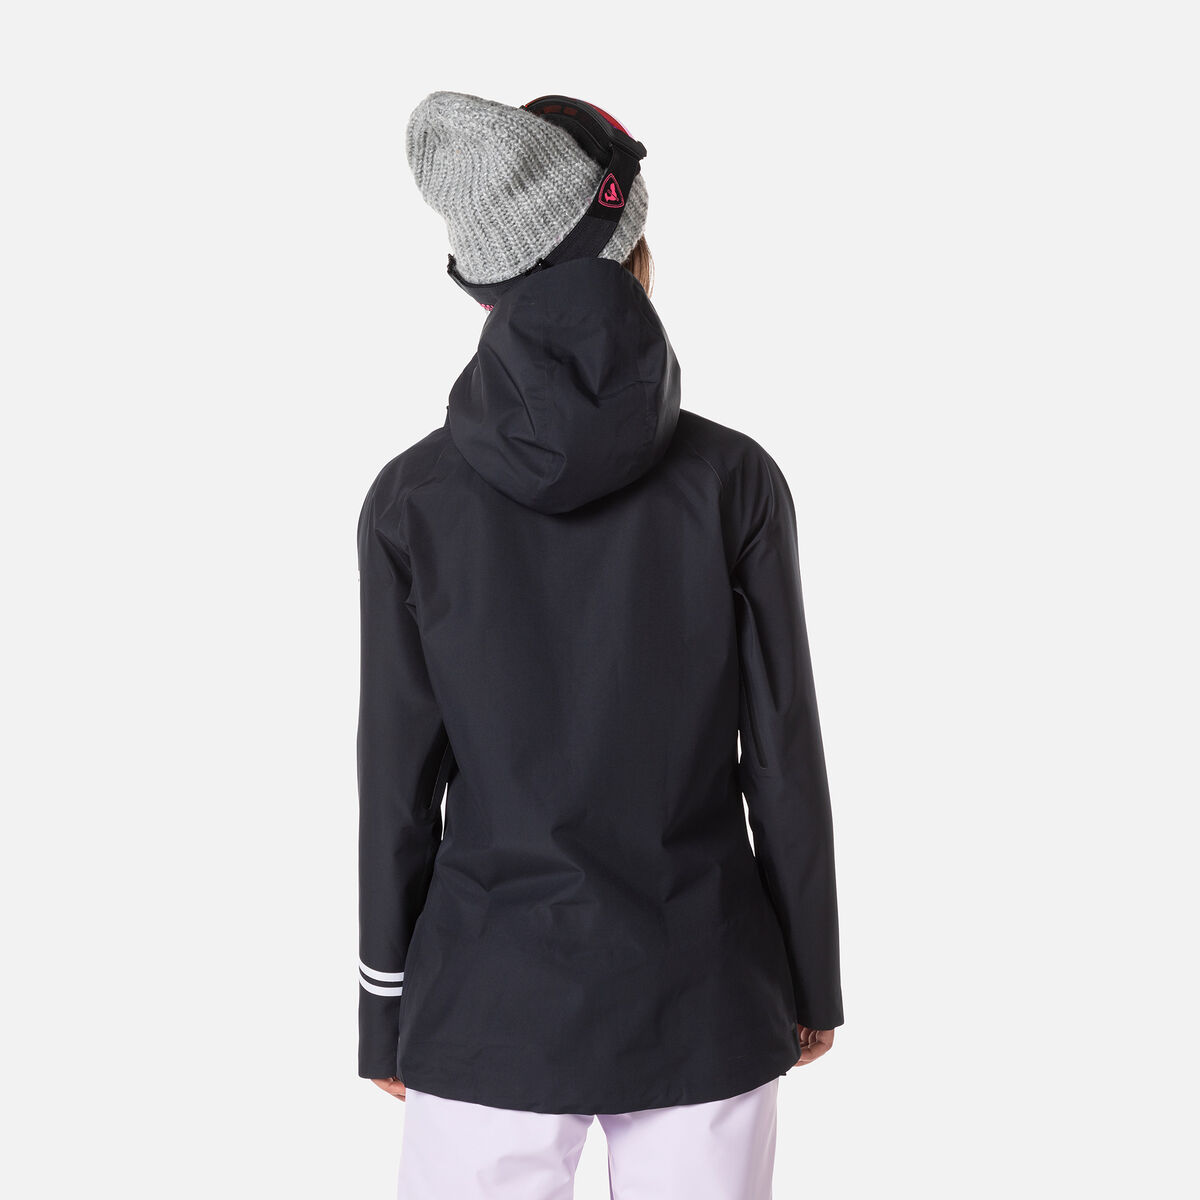 Rossignol Women's Atelier S Ski Jacket Black